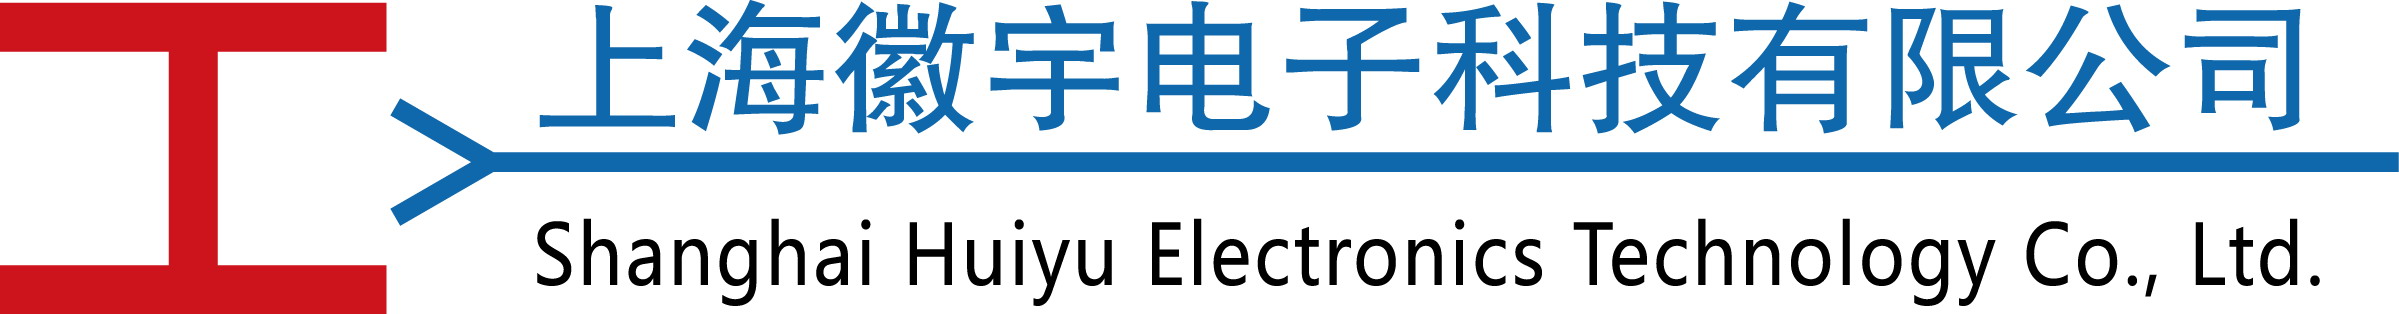 Shanghai Huiyu Electronics Technology Co., Ltd. 